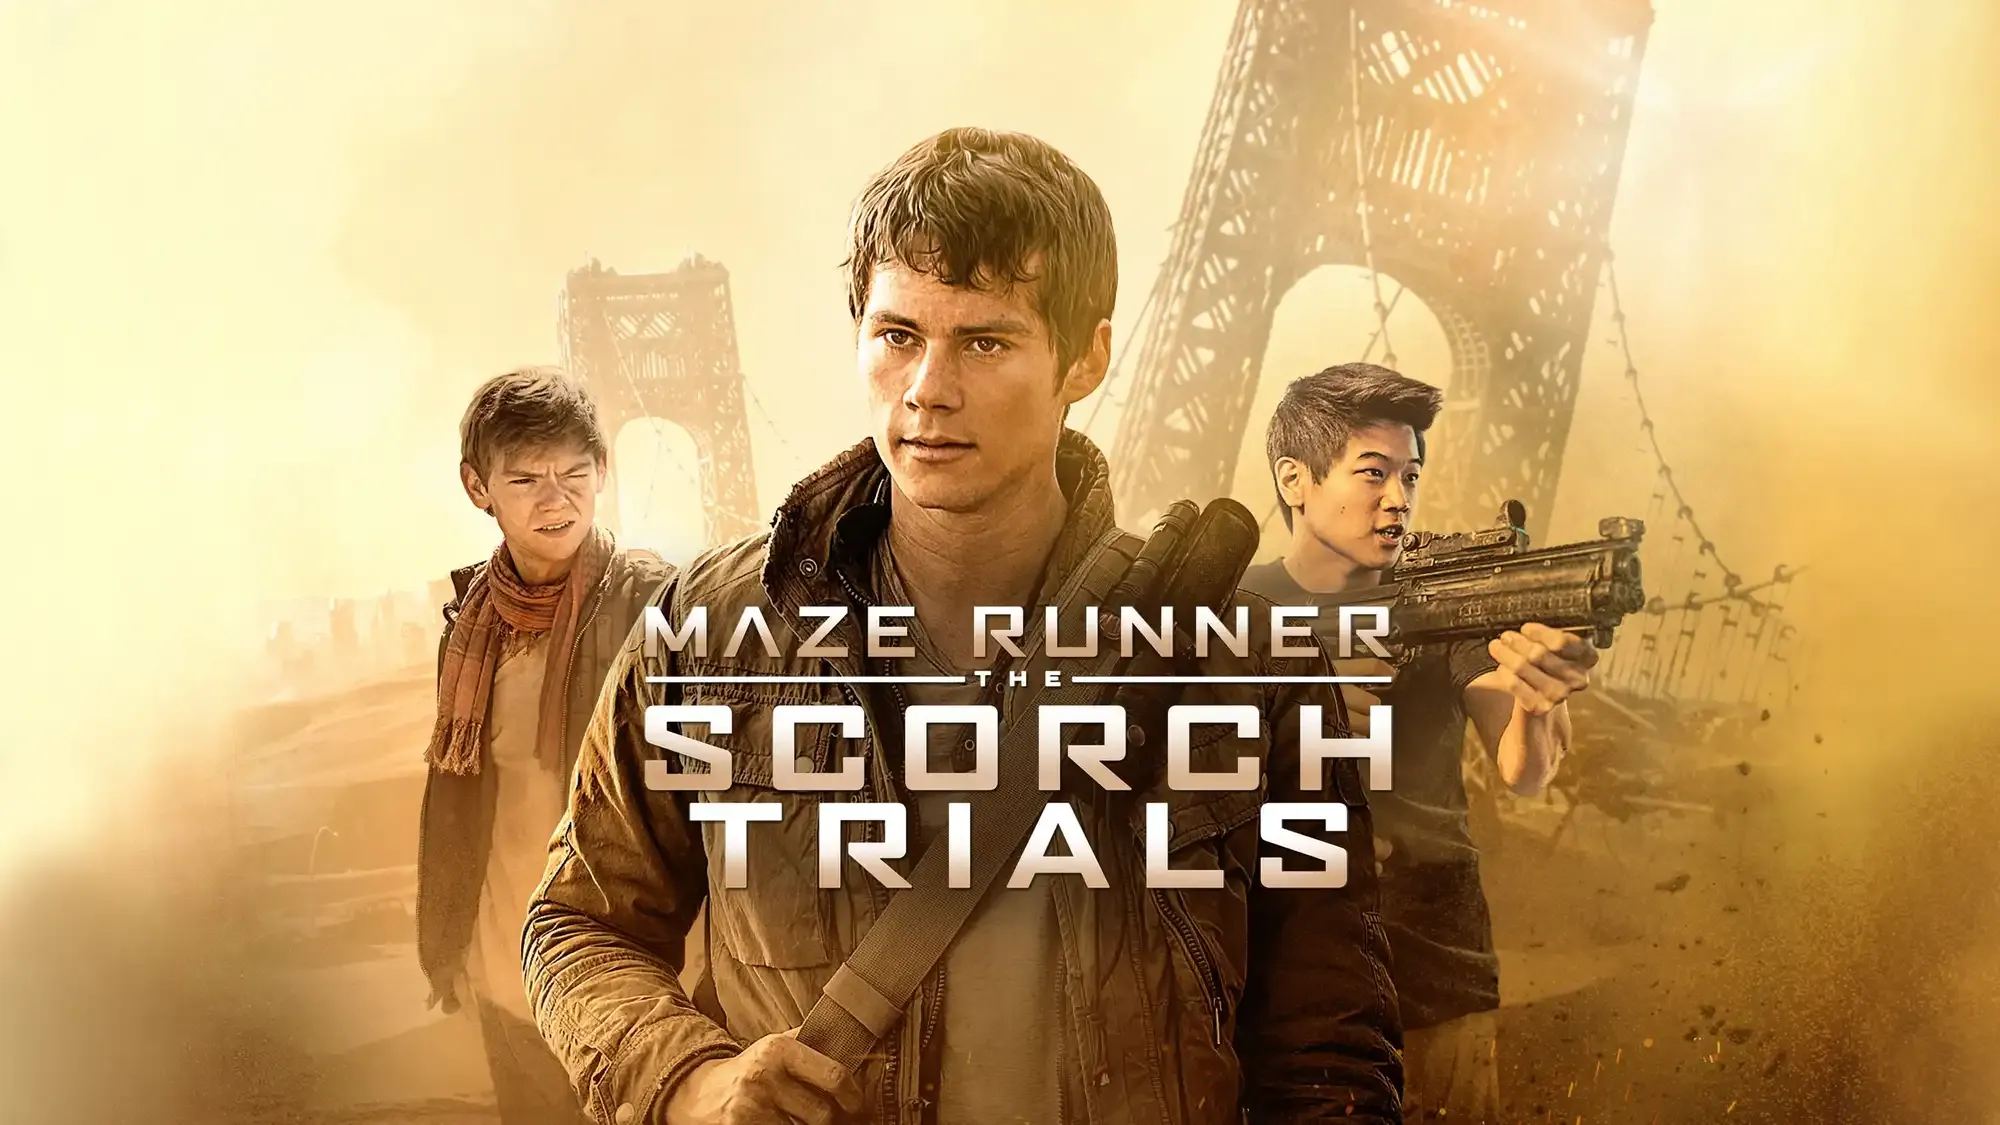 Maze Runner: The Scorch Trials movie review